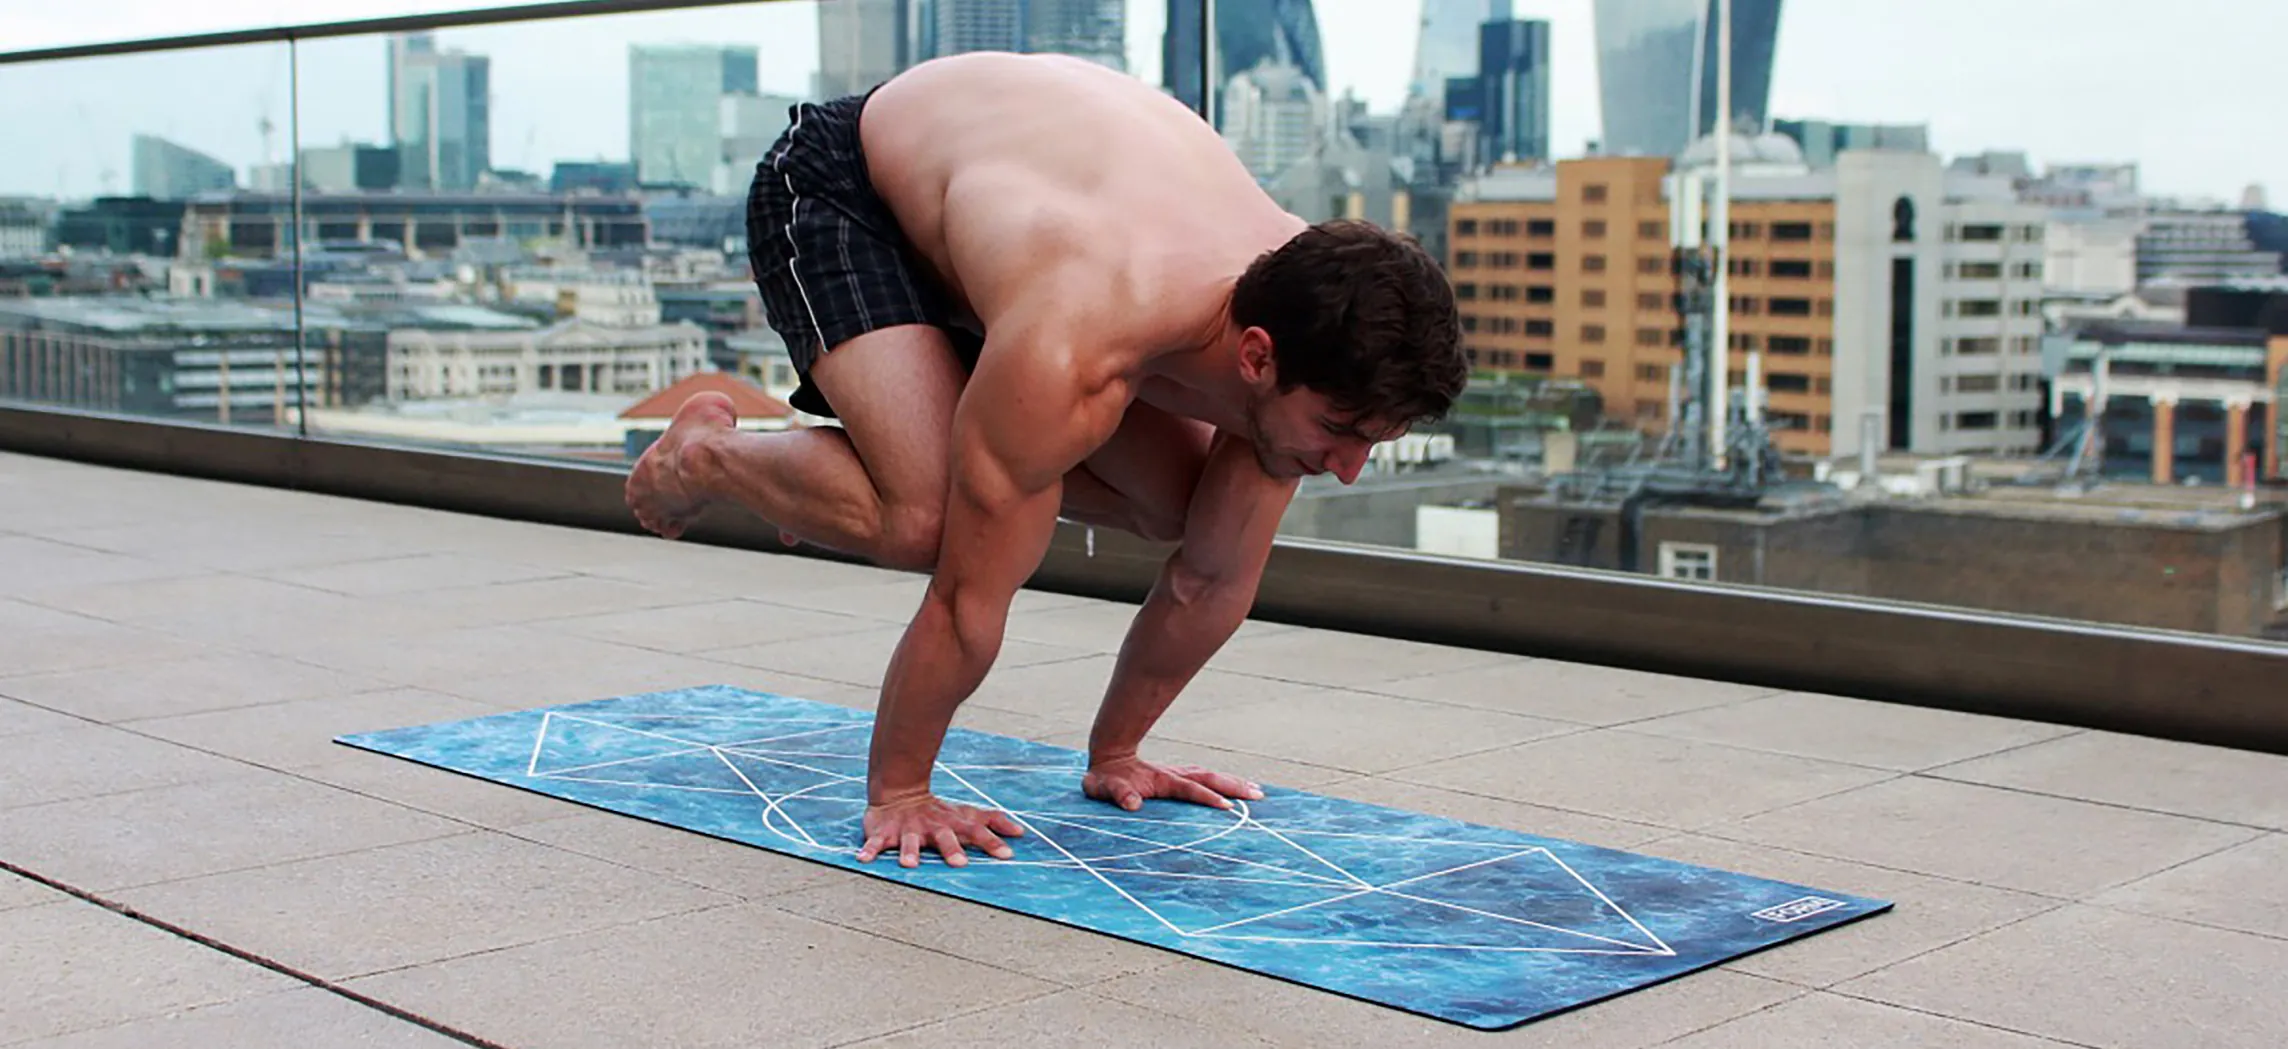 This photo shows a man executing a yoga pose.